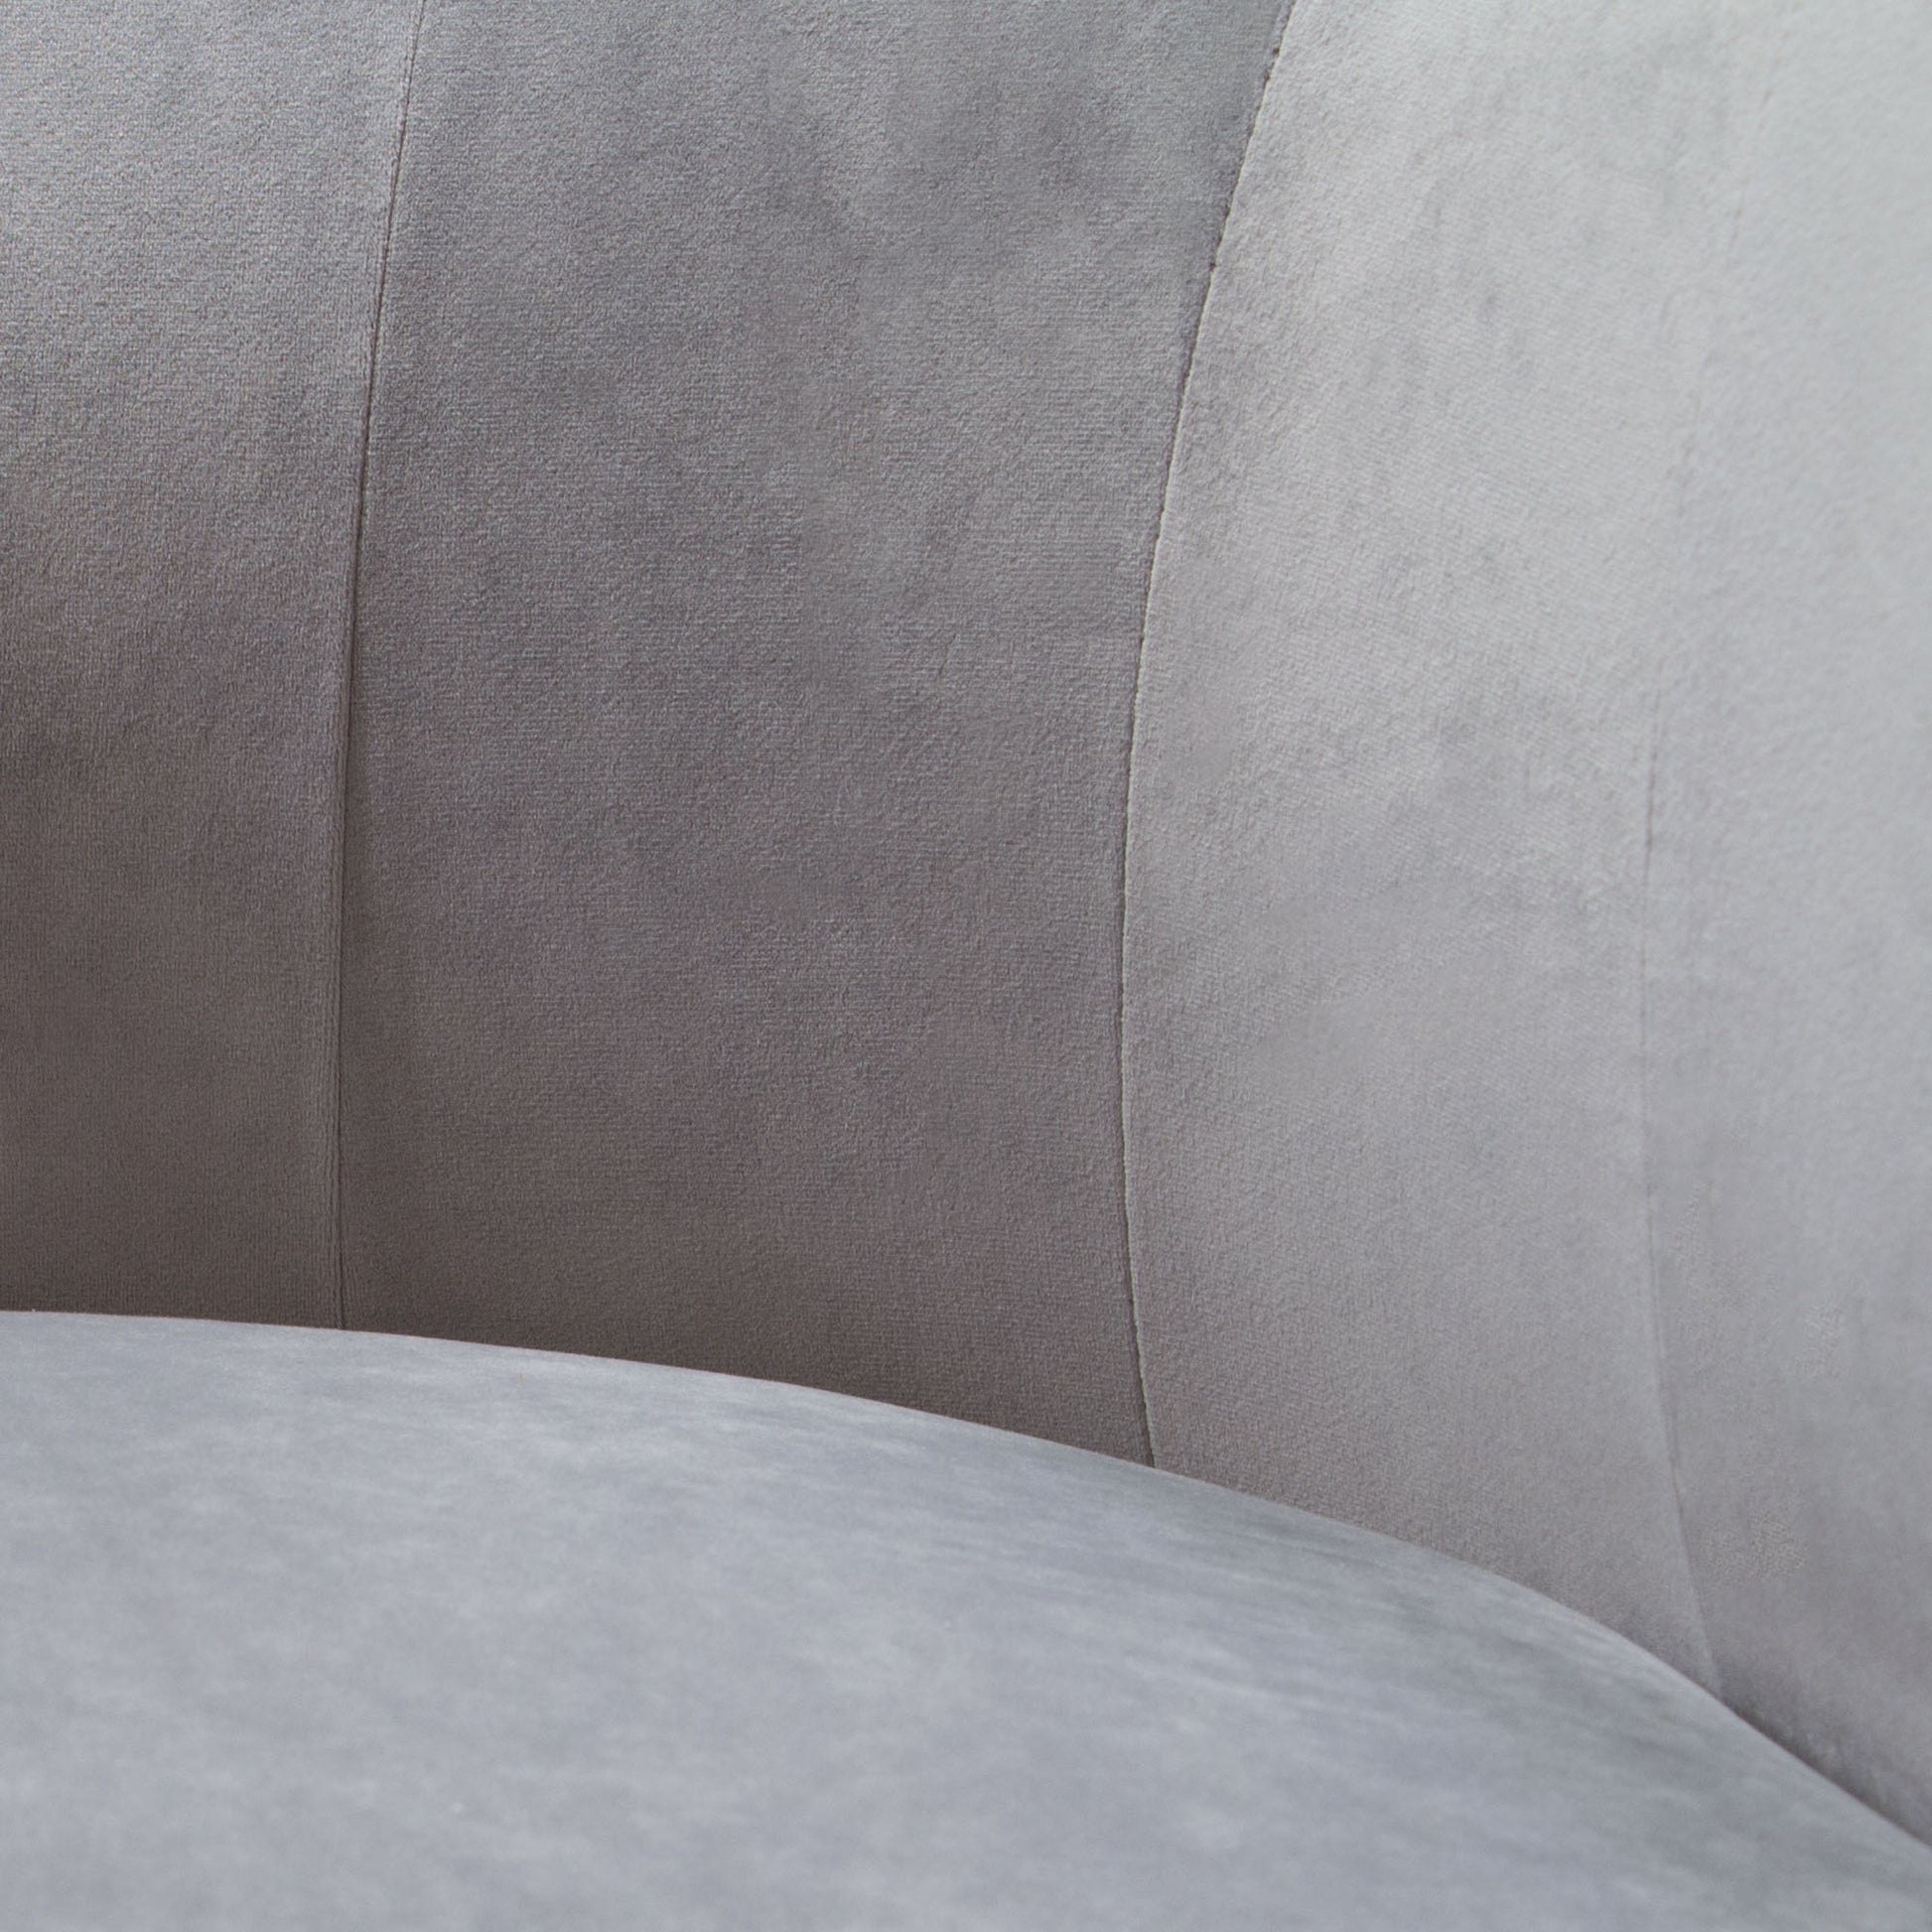 Pandora Upholstered Armchair